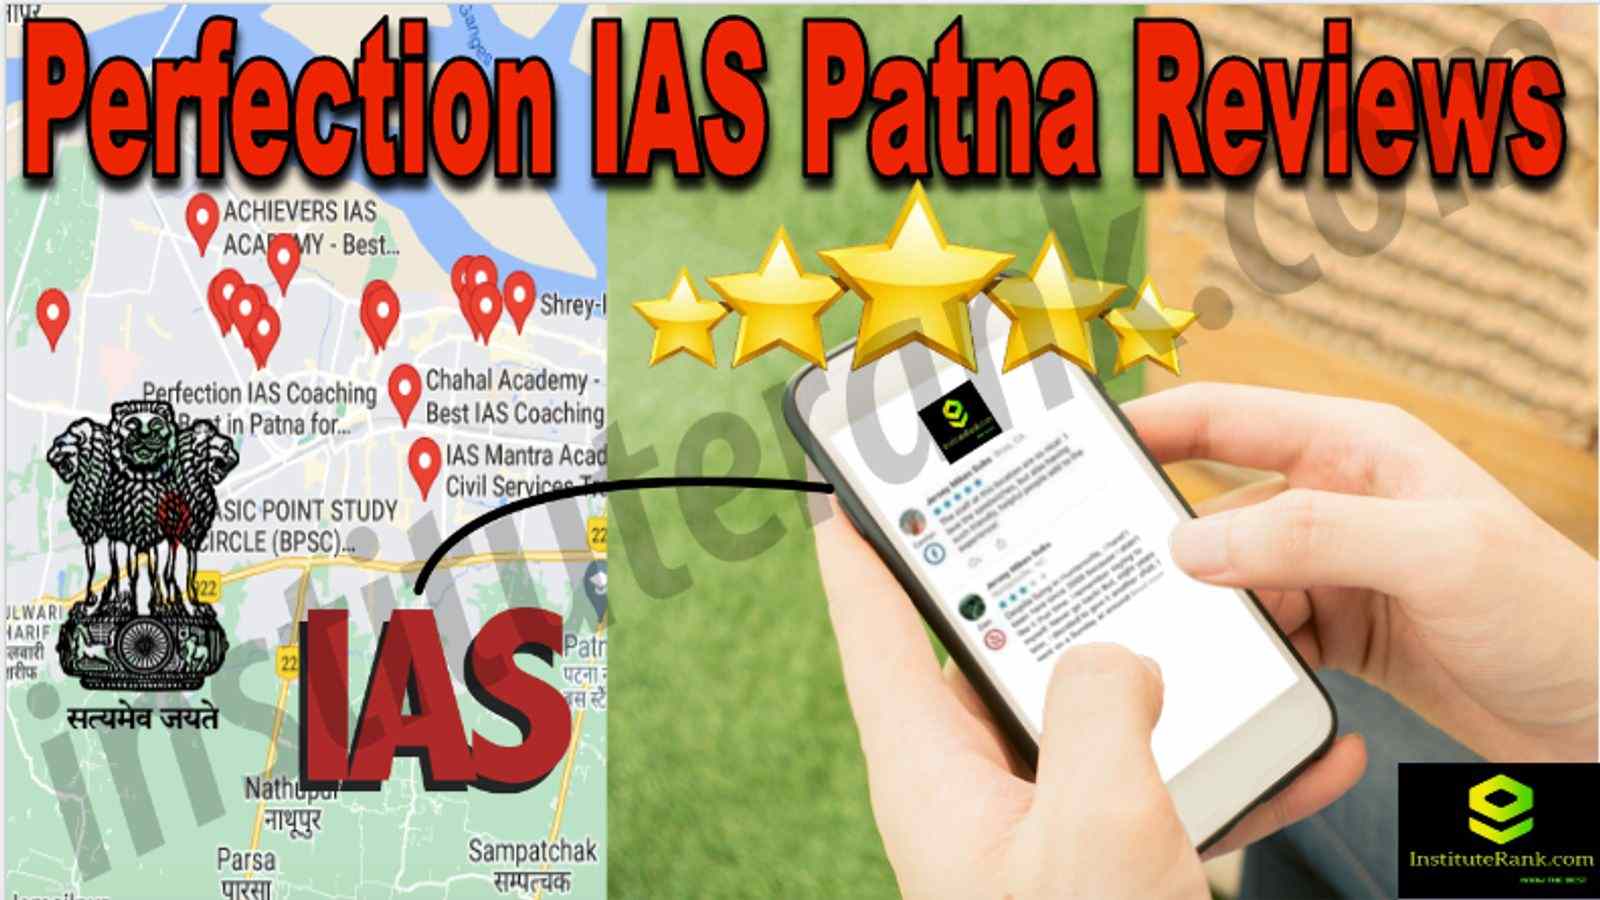 Perfection IAS Patna Reviews